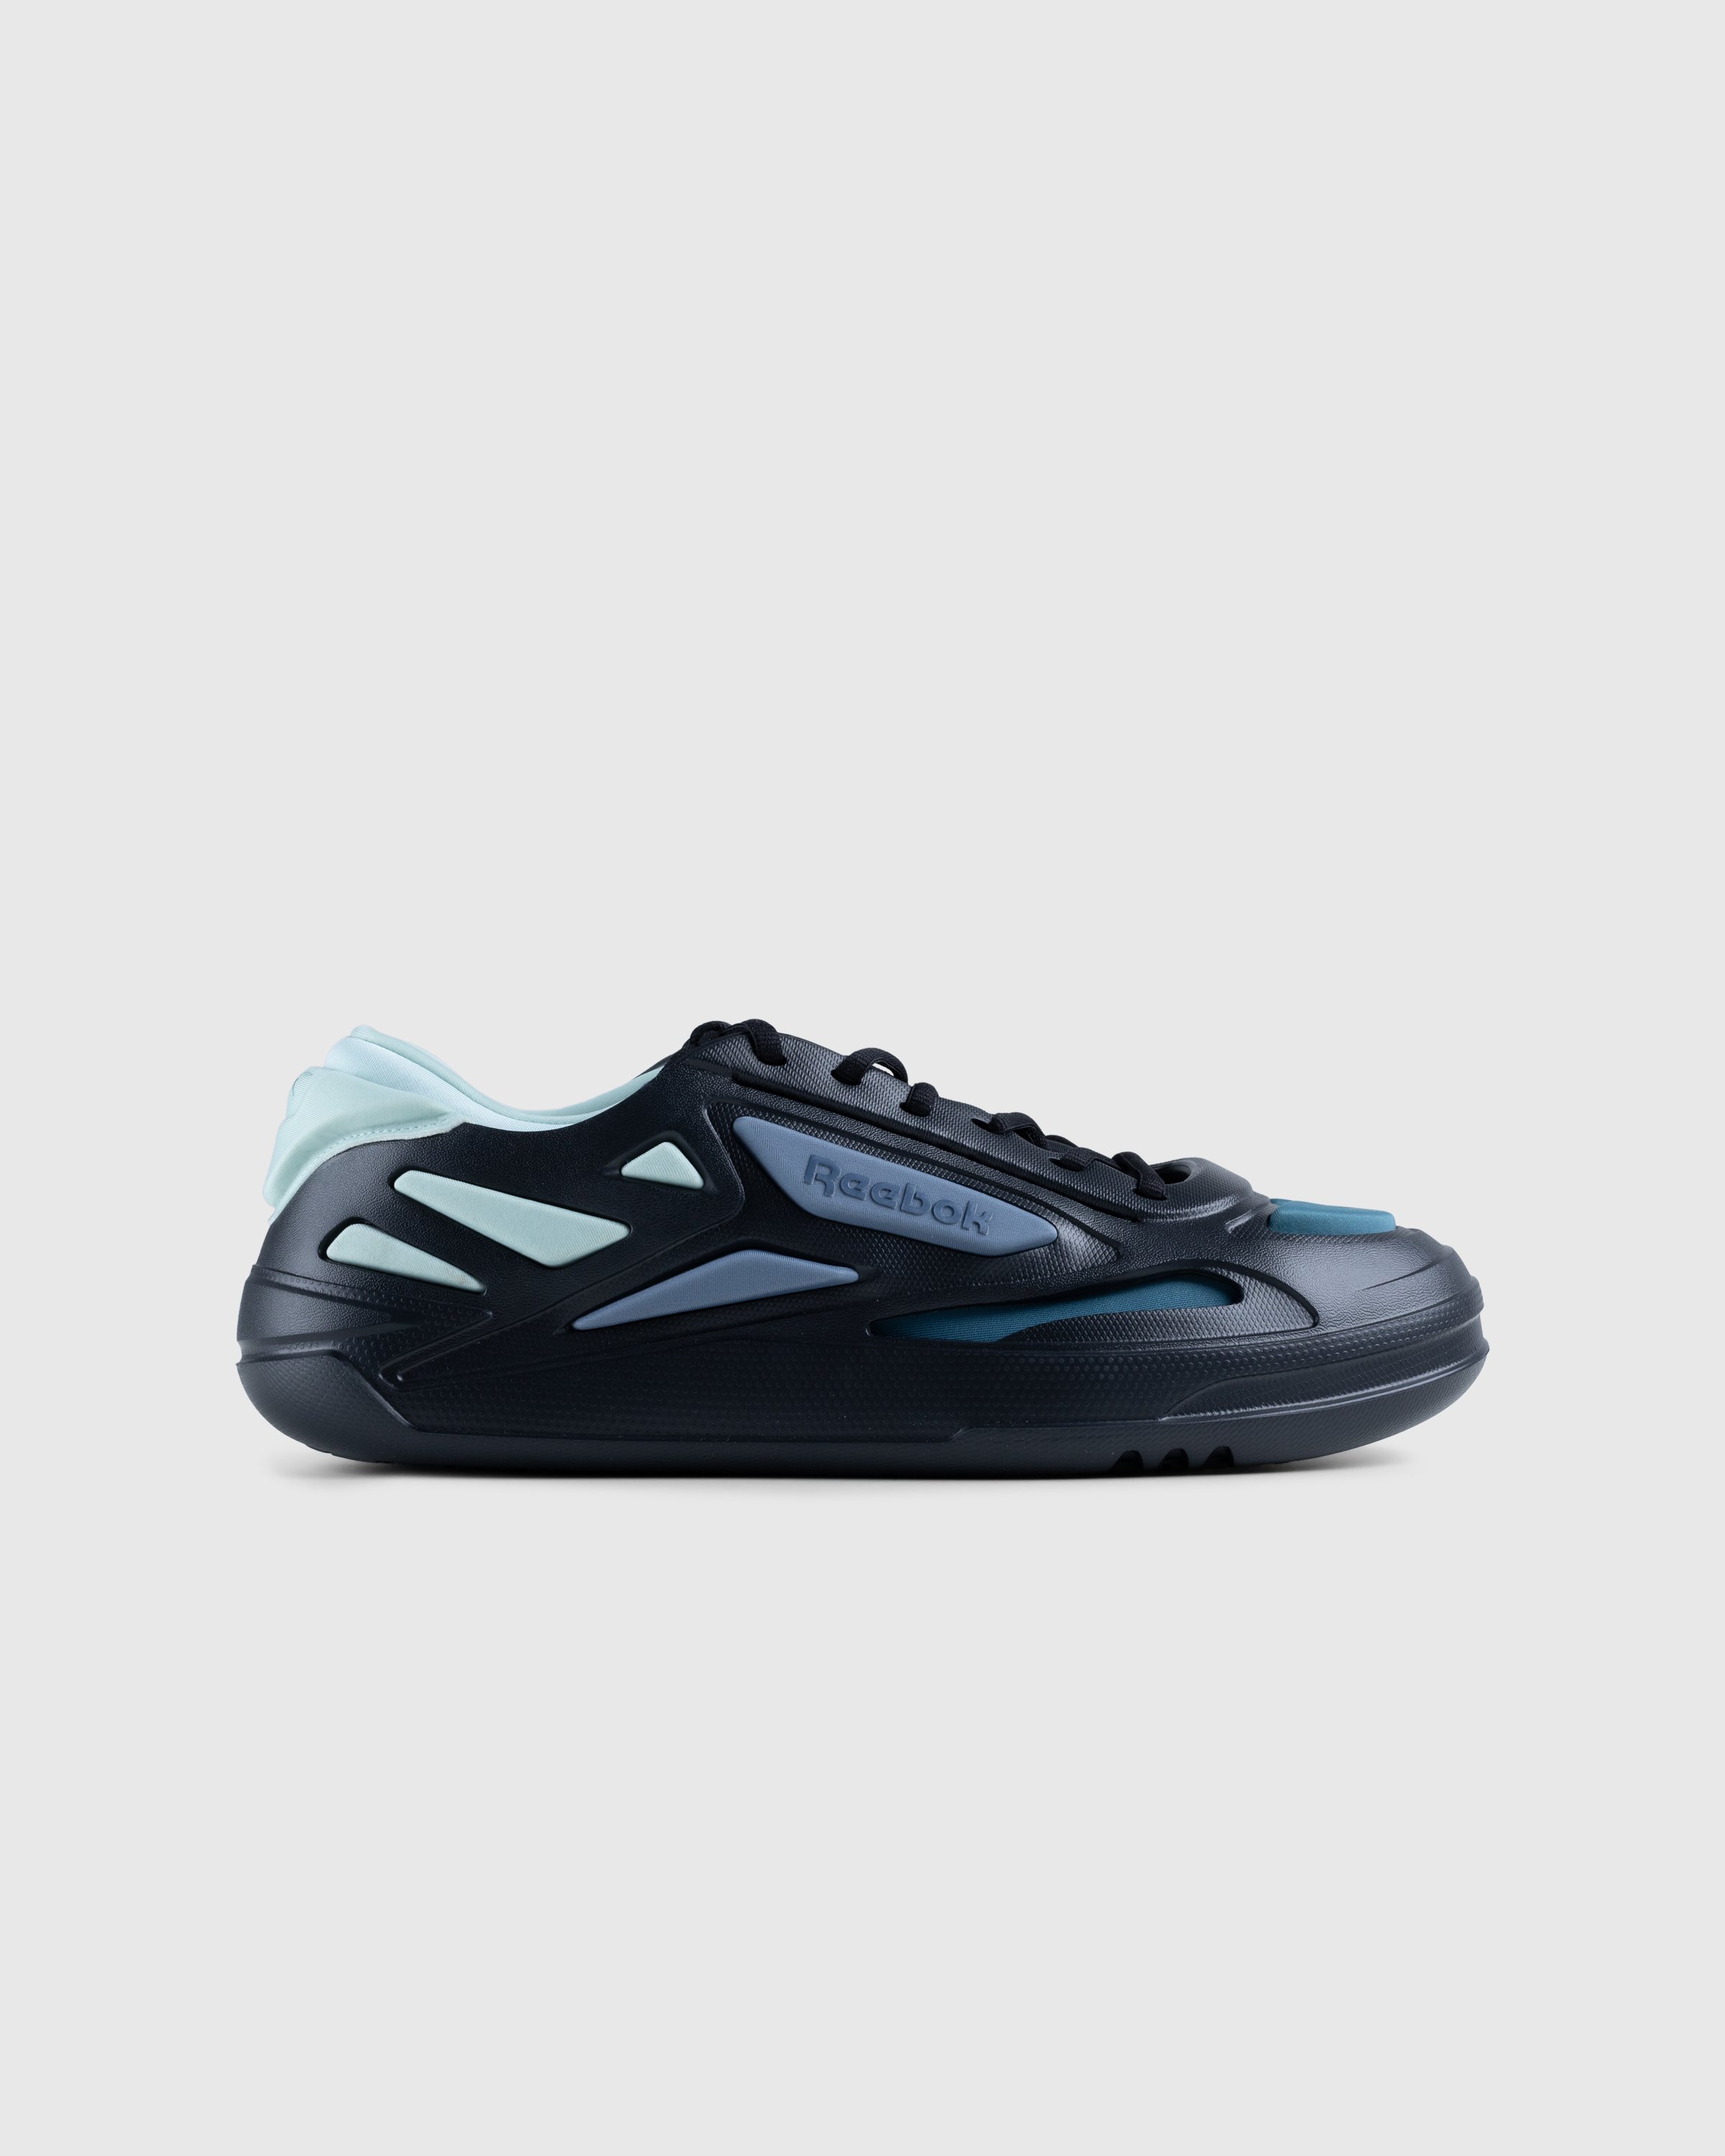 Reebok - Future Club C Black/Dusty Blue - Footwear - Multi - Image 1